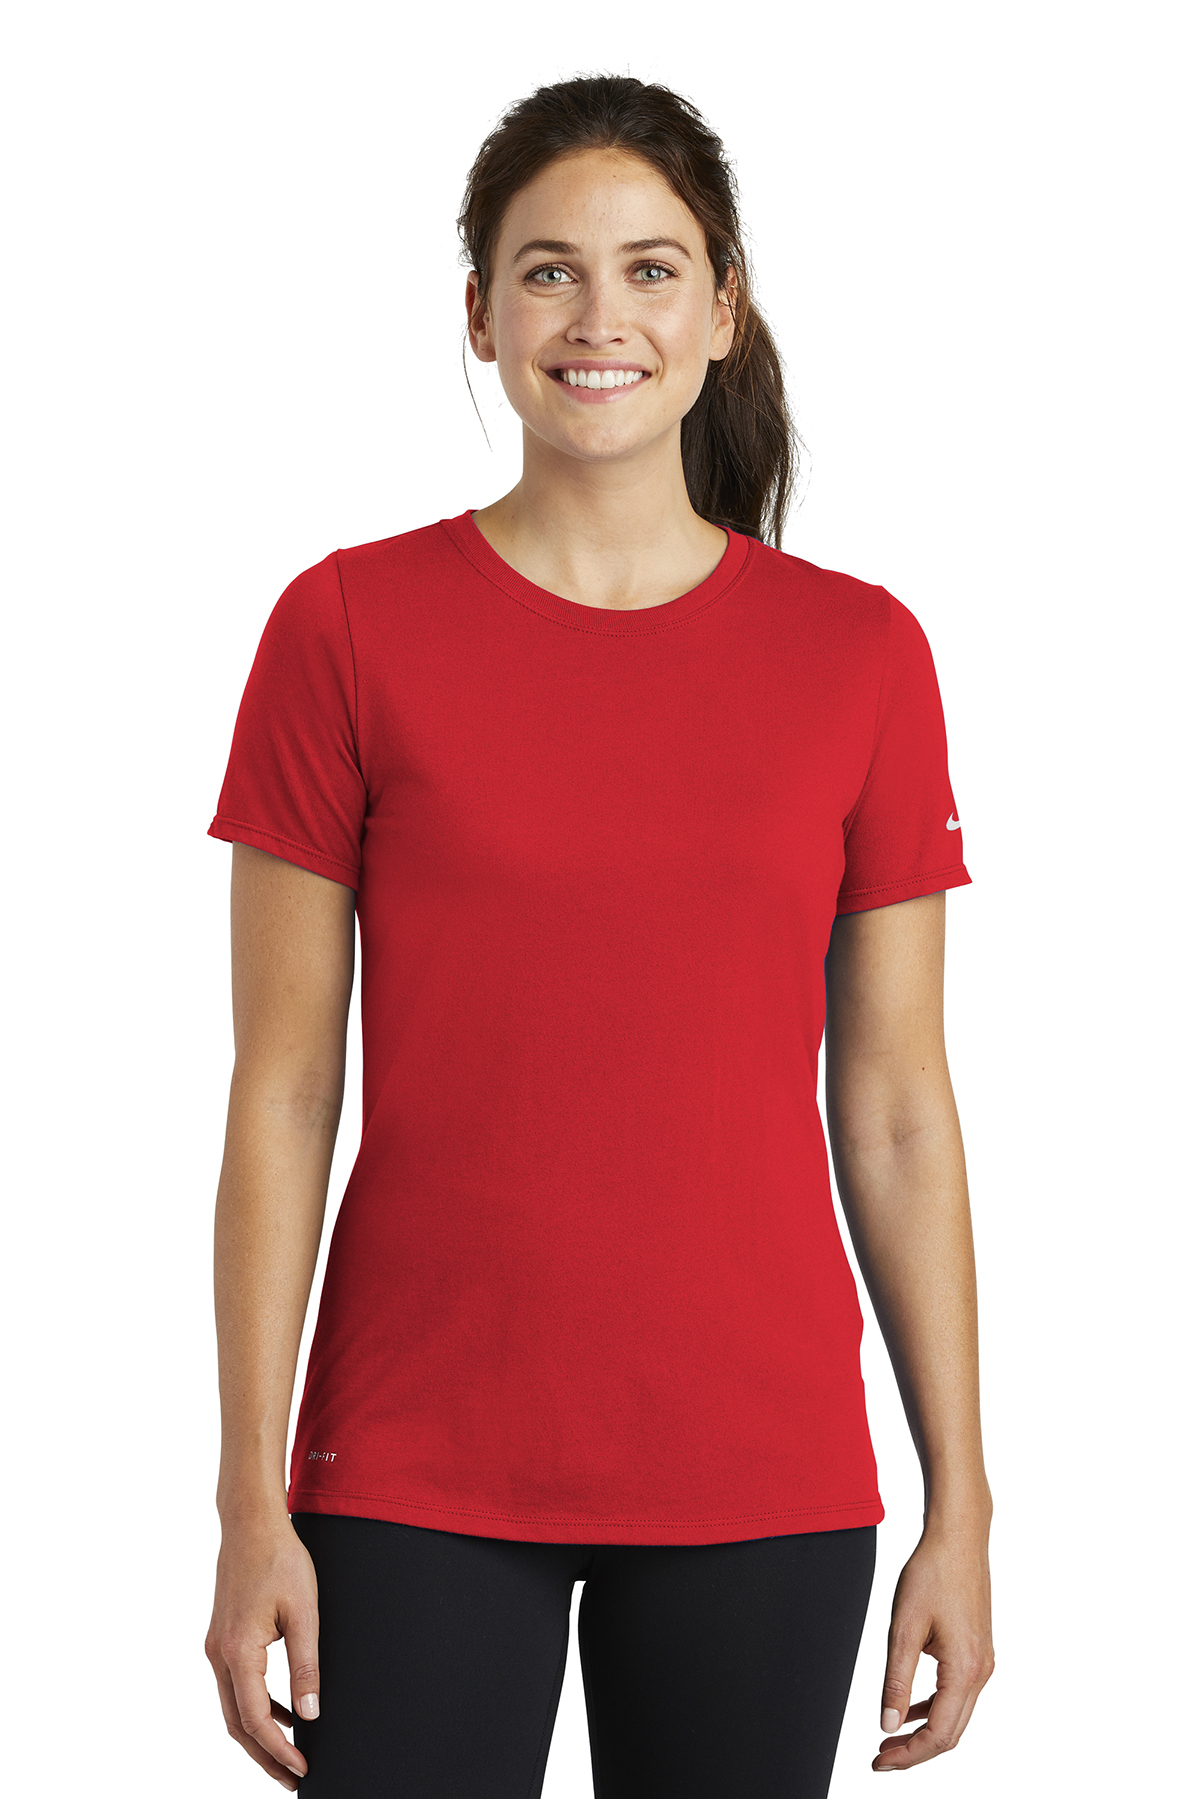 red nike shirts womens